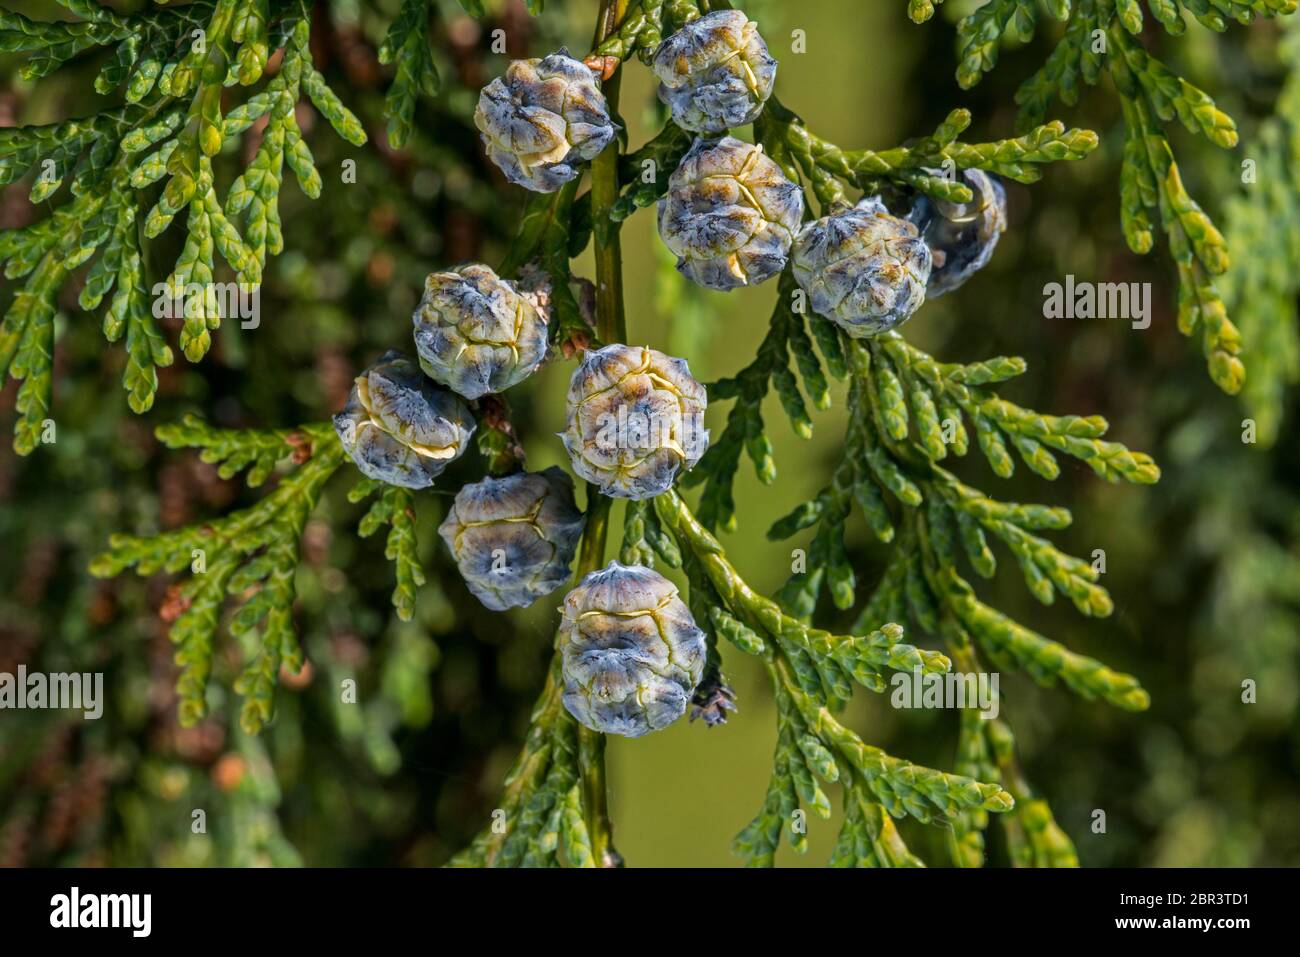 Port Orford cedar / Lawson cypress (Chamaecyparis lawsoniana) cultivar Dik's Weeping showing female cones in spring Stock Photo